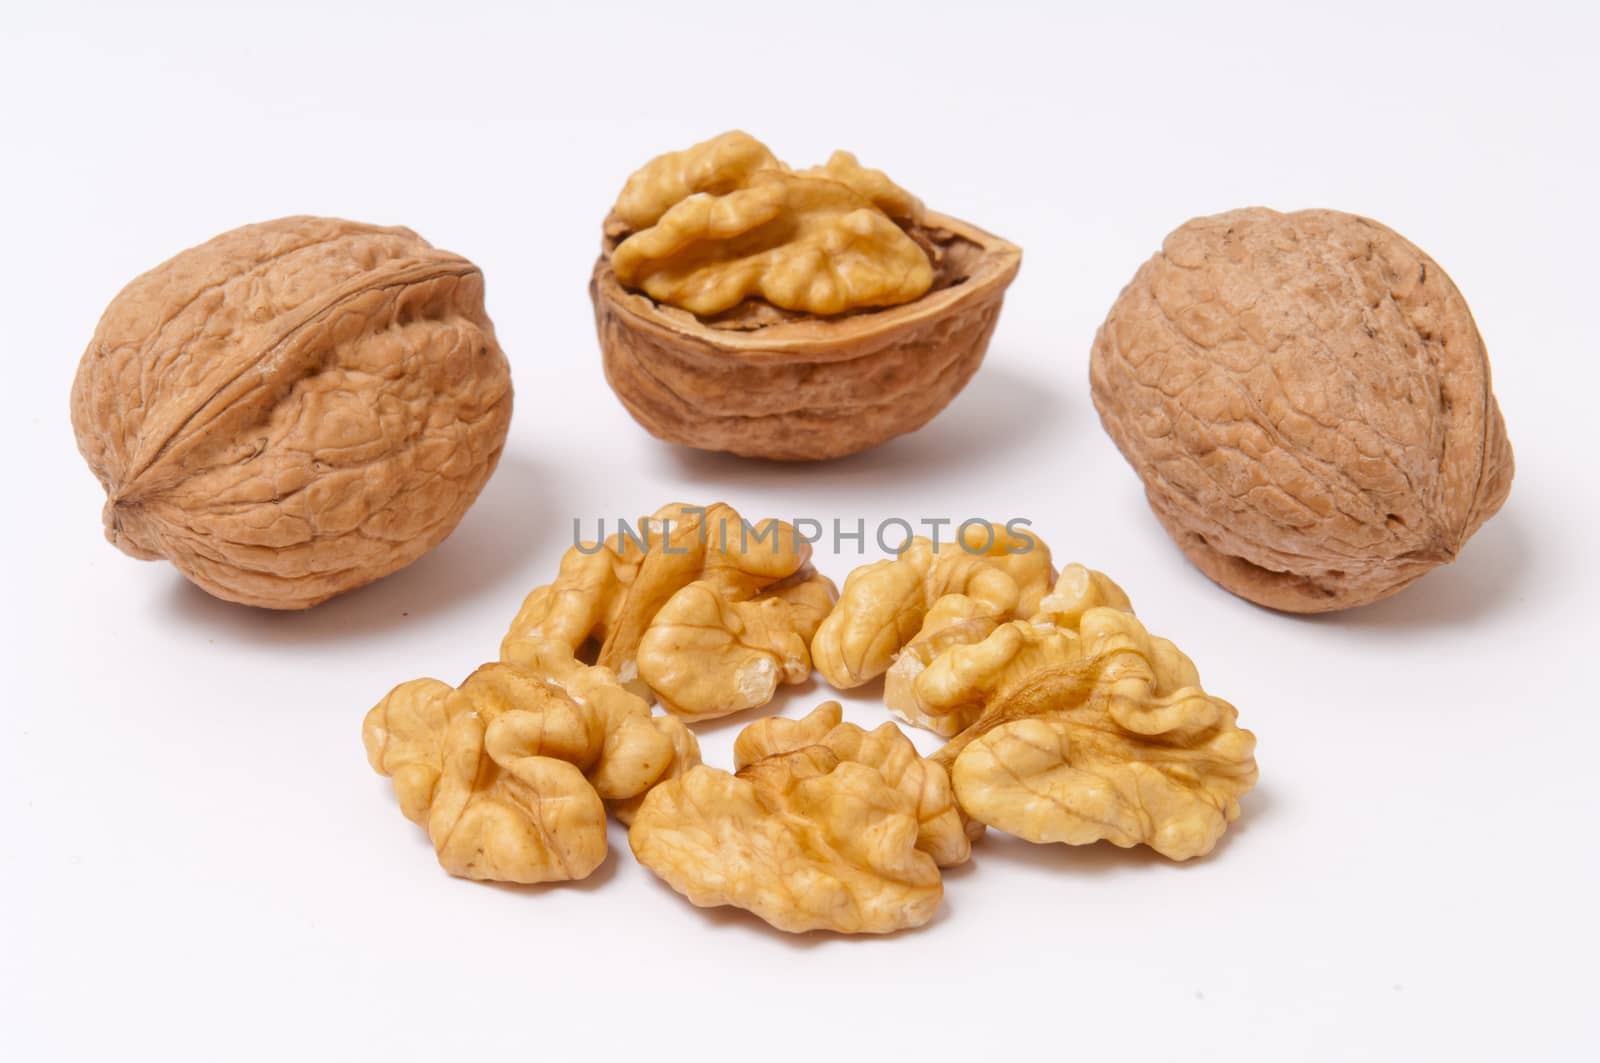 Whole walnuts and walnut kernels on white background